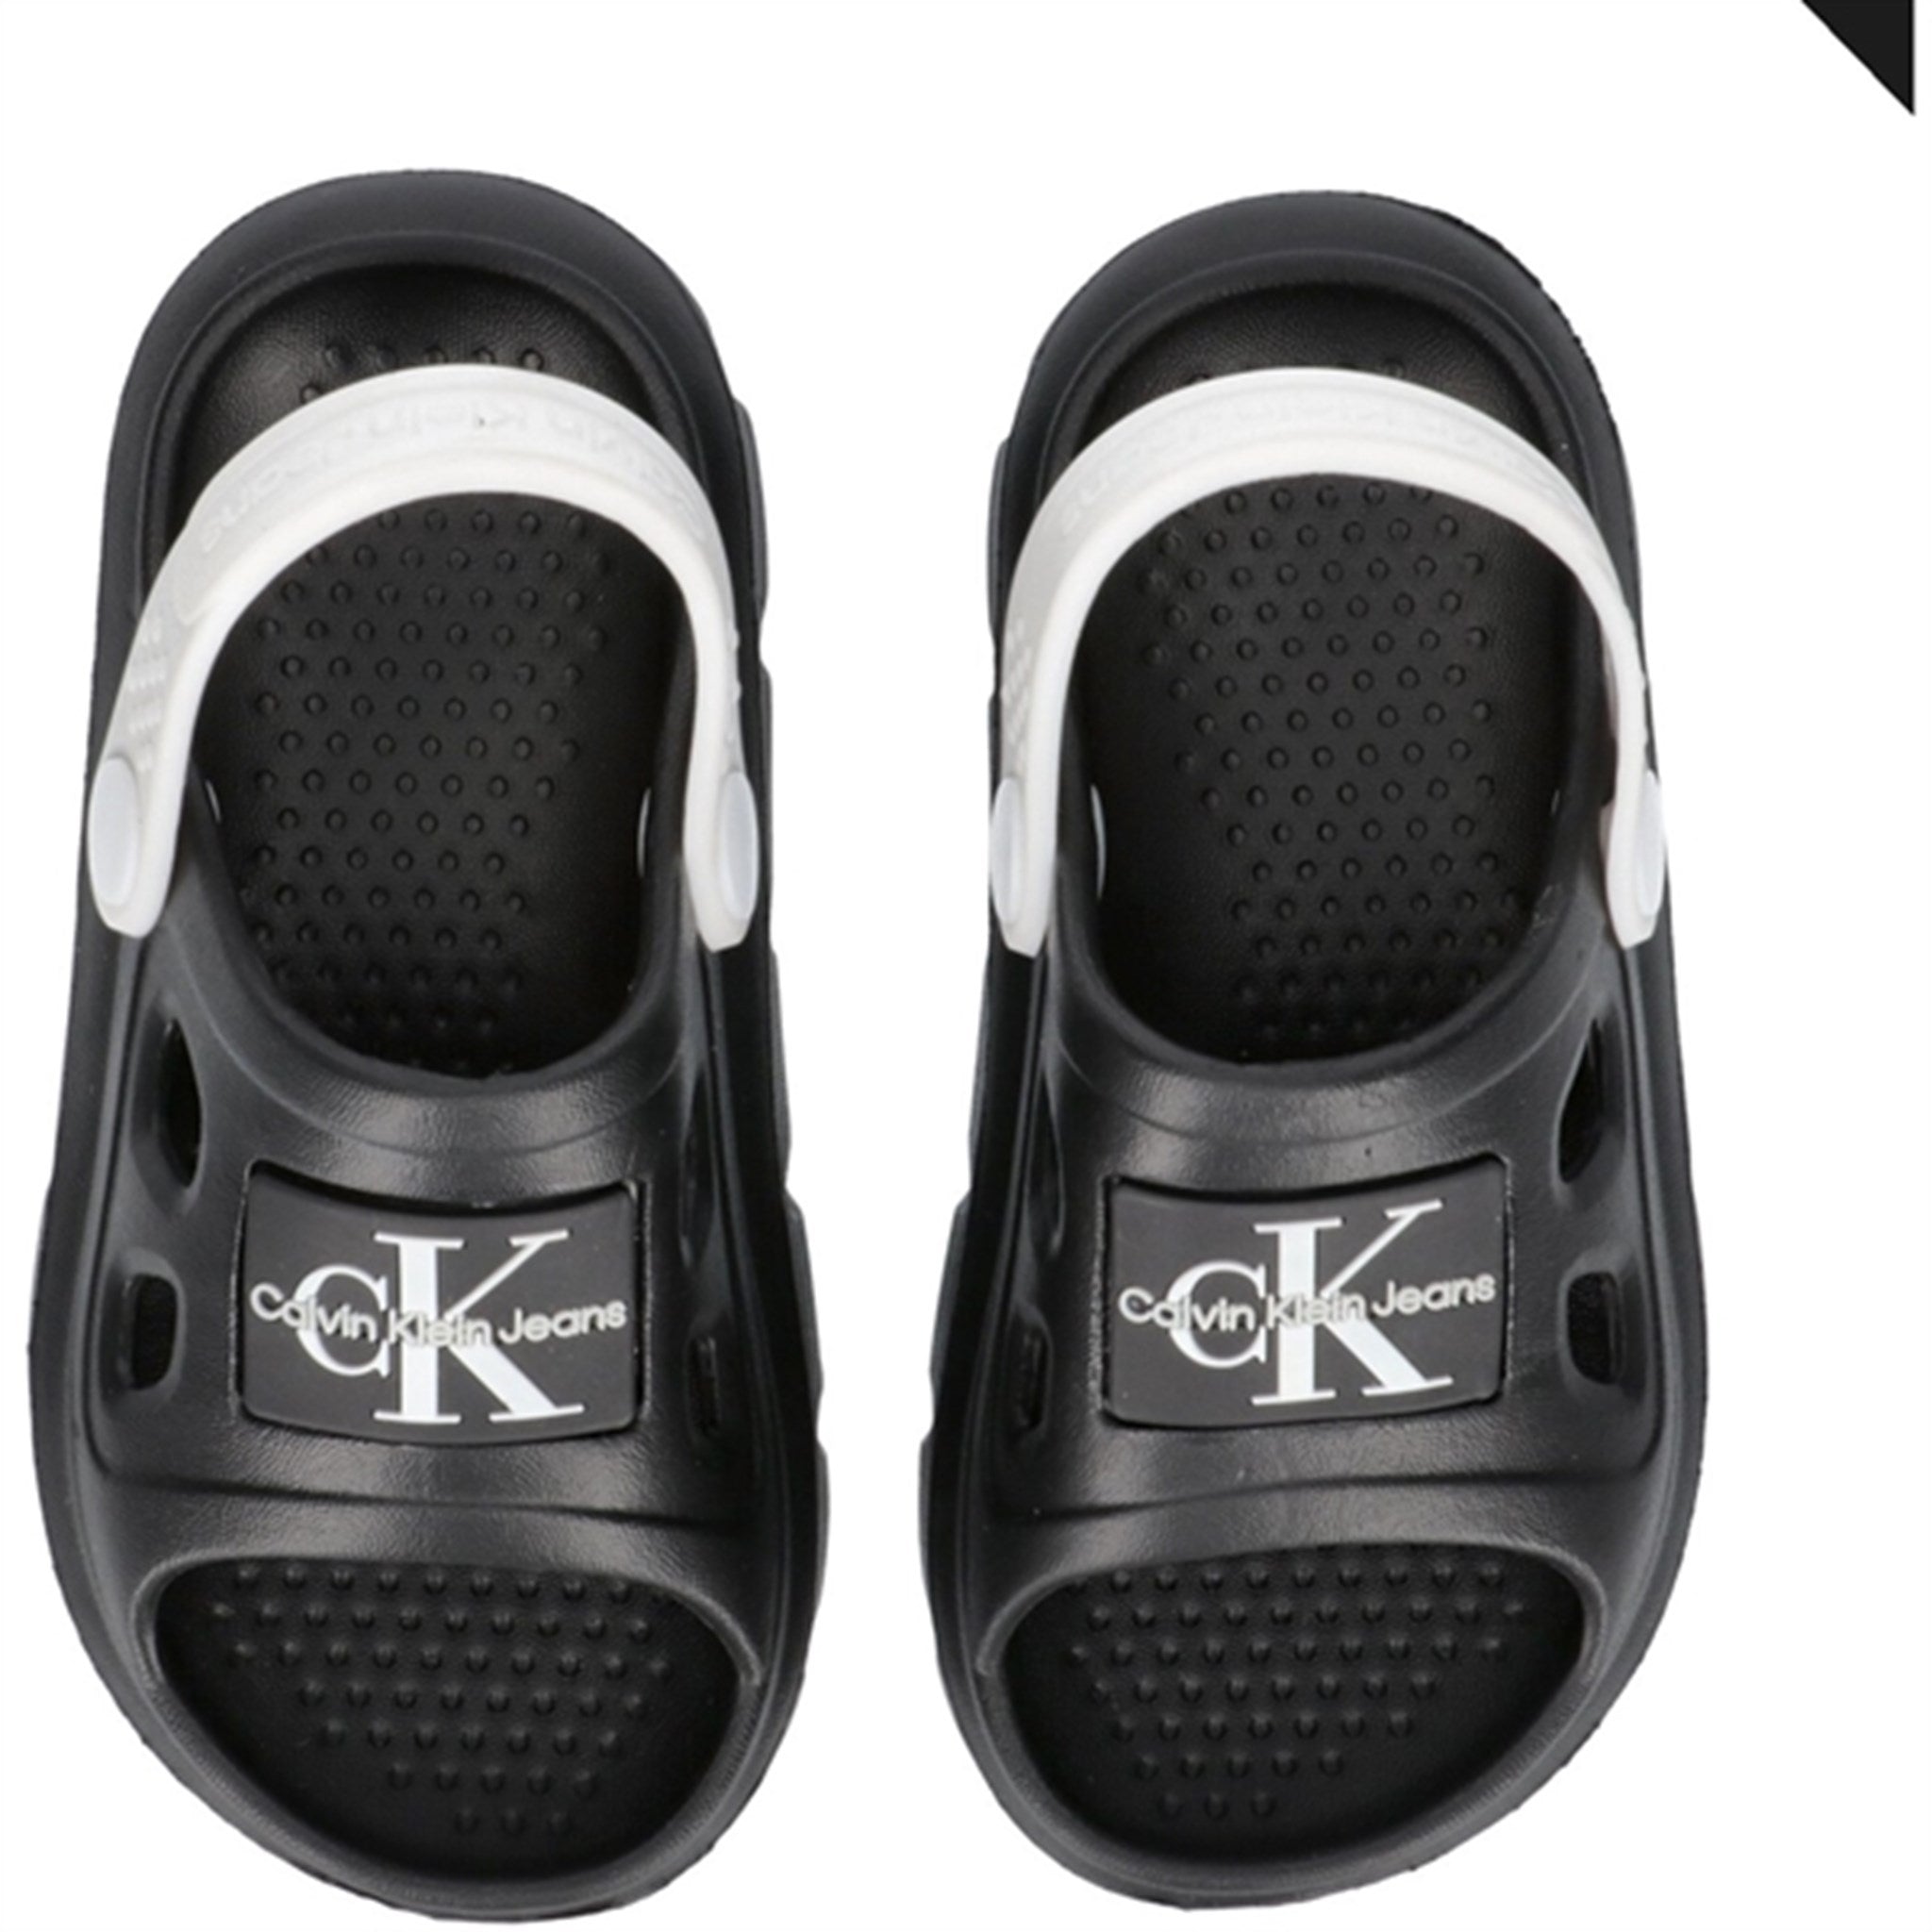 Calvin Klein Comfy Sandal Black/White 3